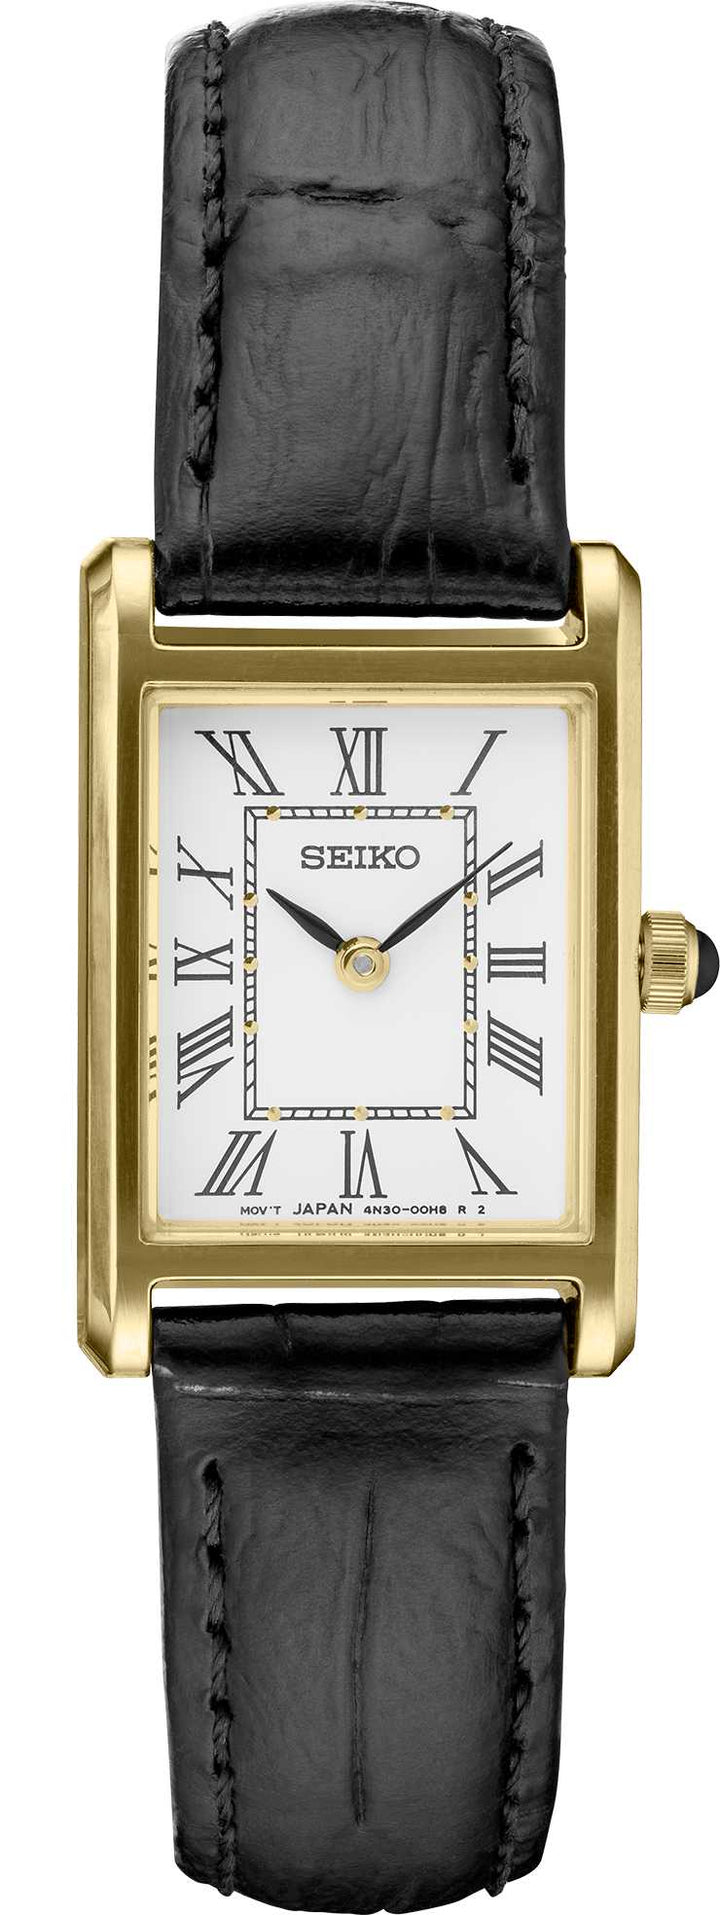 Seiko SWR054 Watch Technicians Store